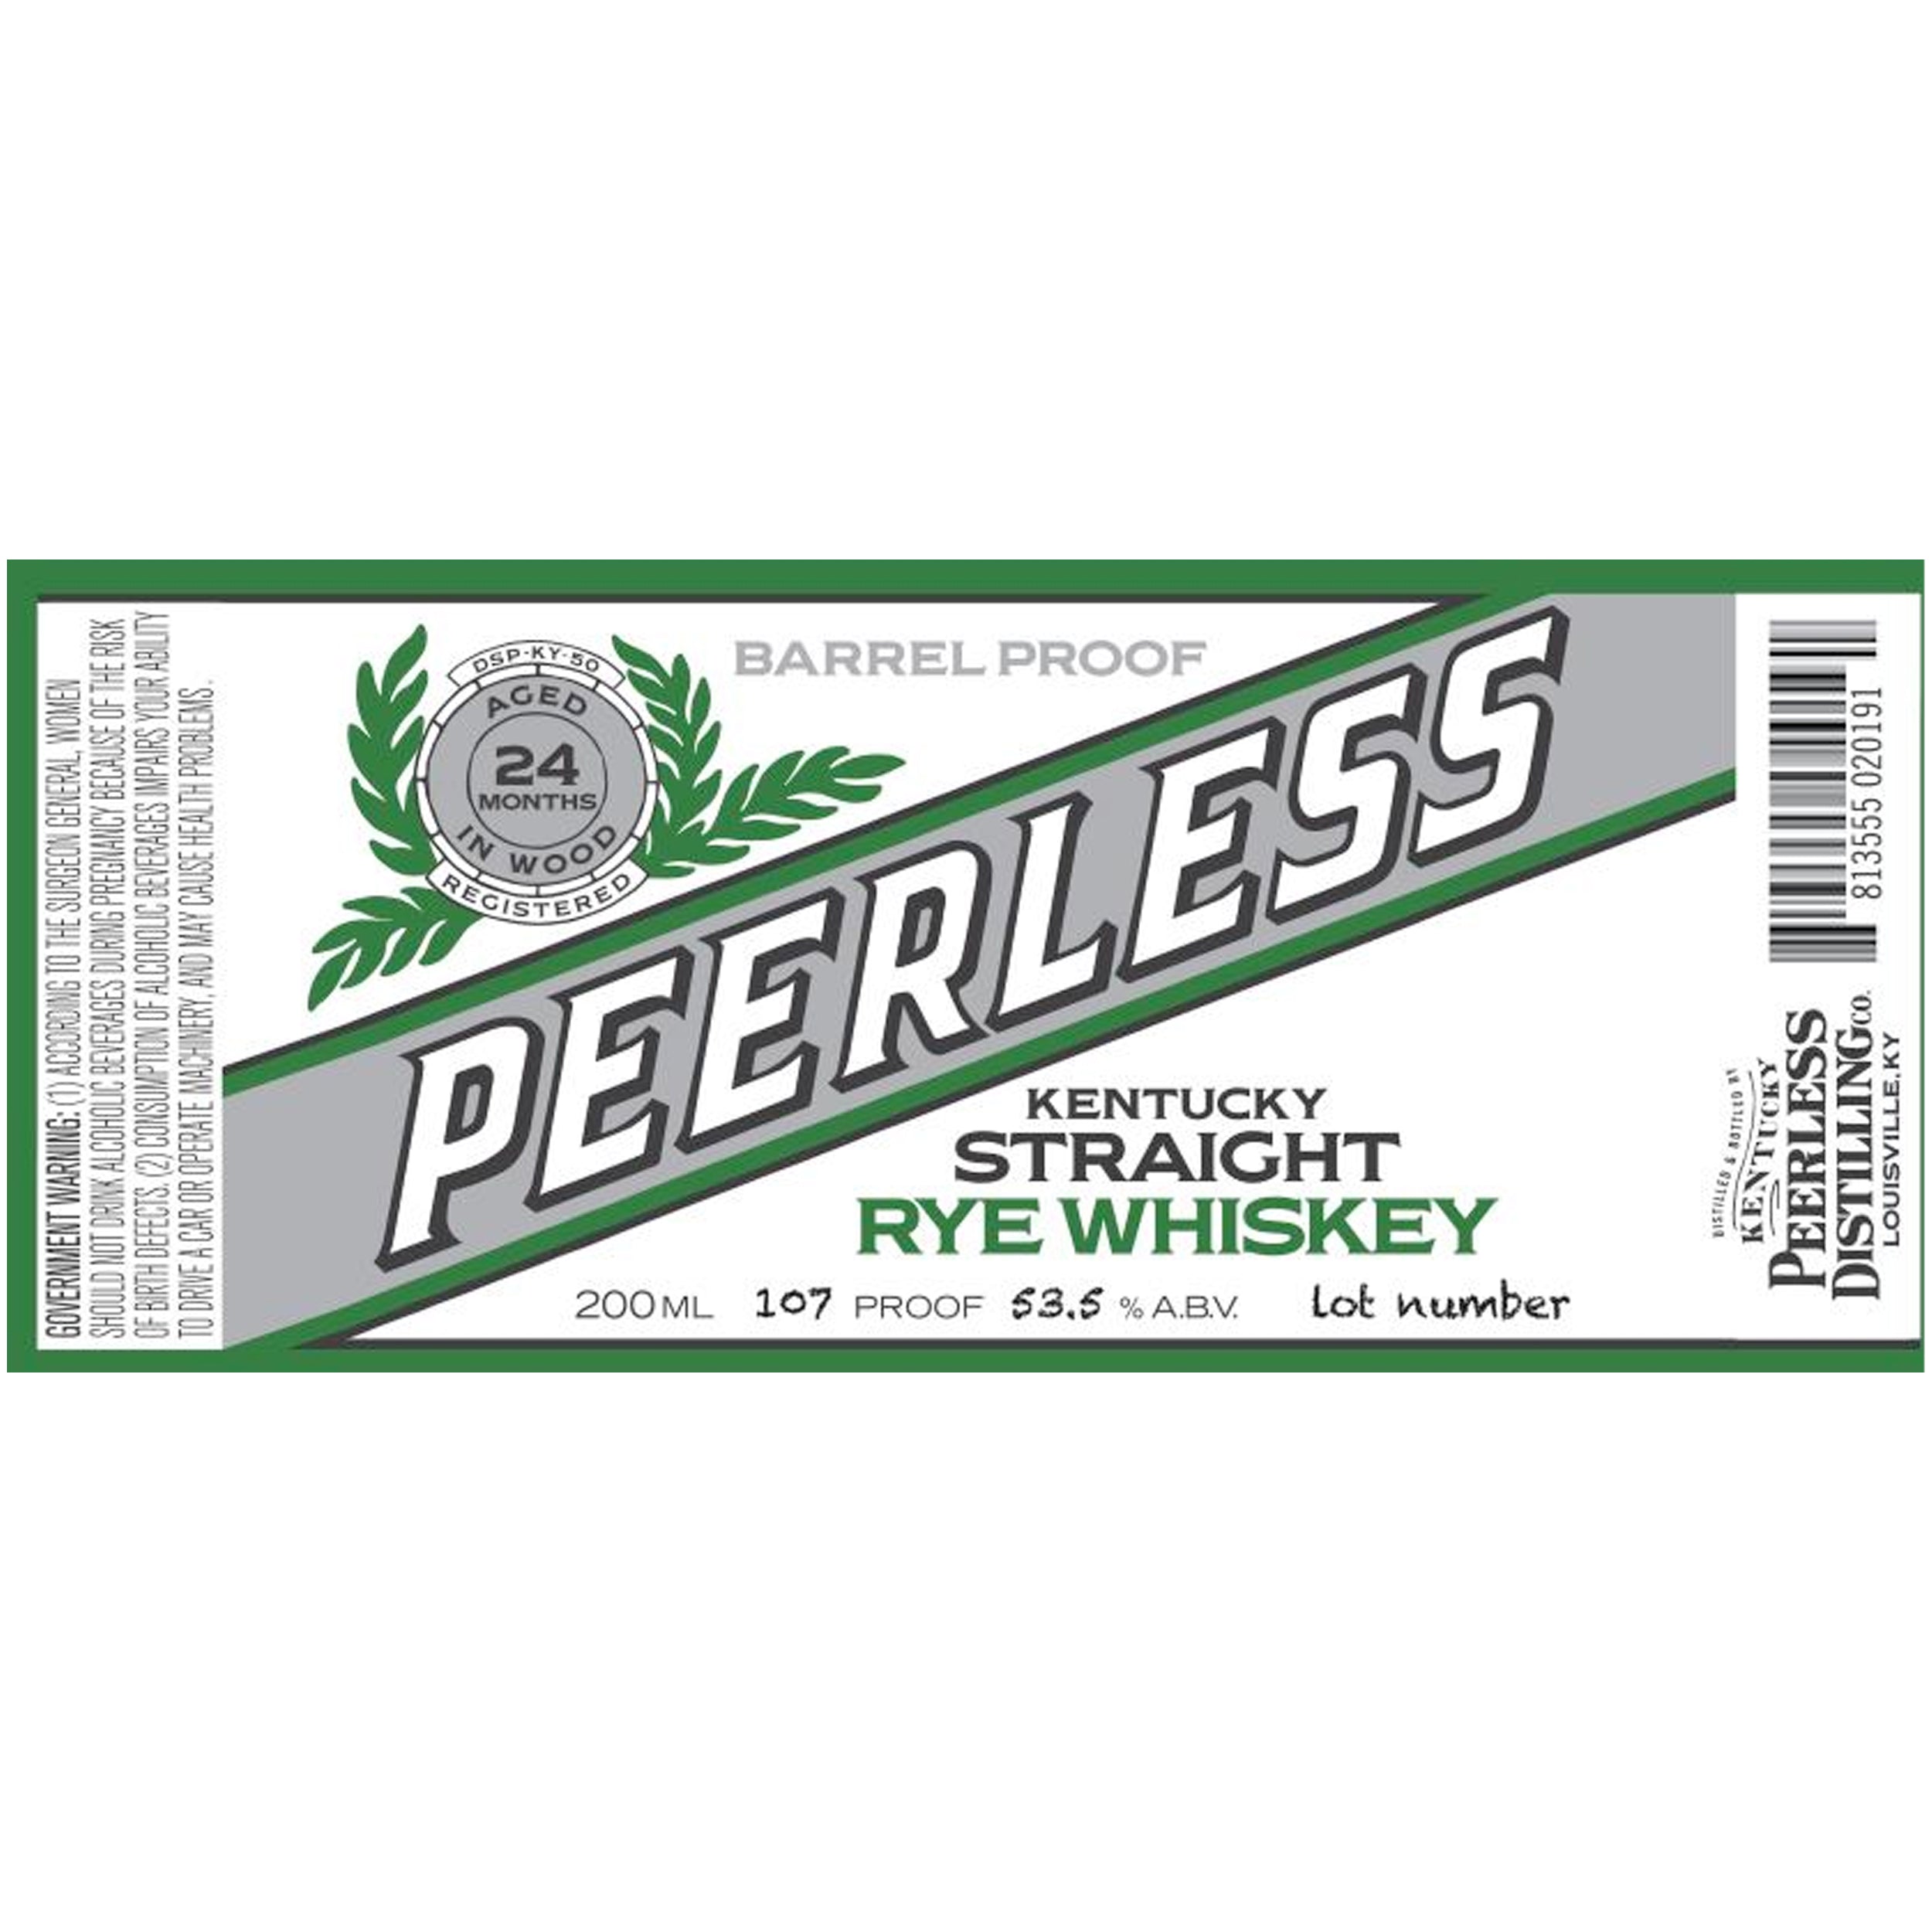 Peerless Barrel Aged Kentucky Straight Rye Whiskey